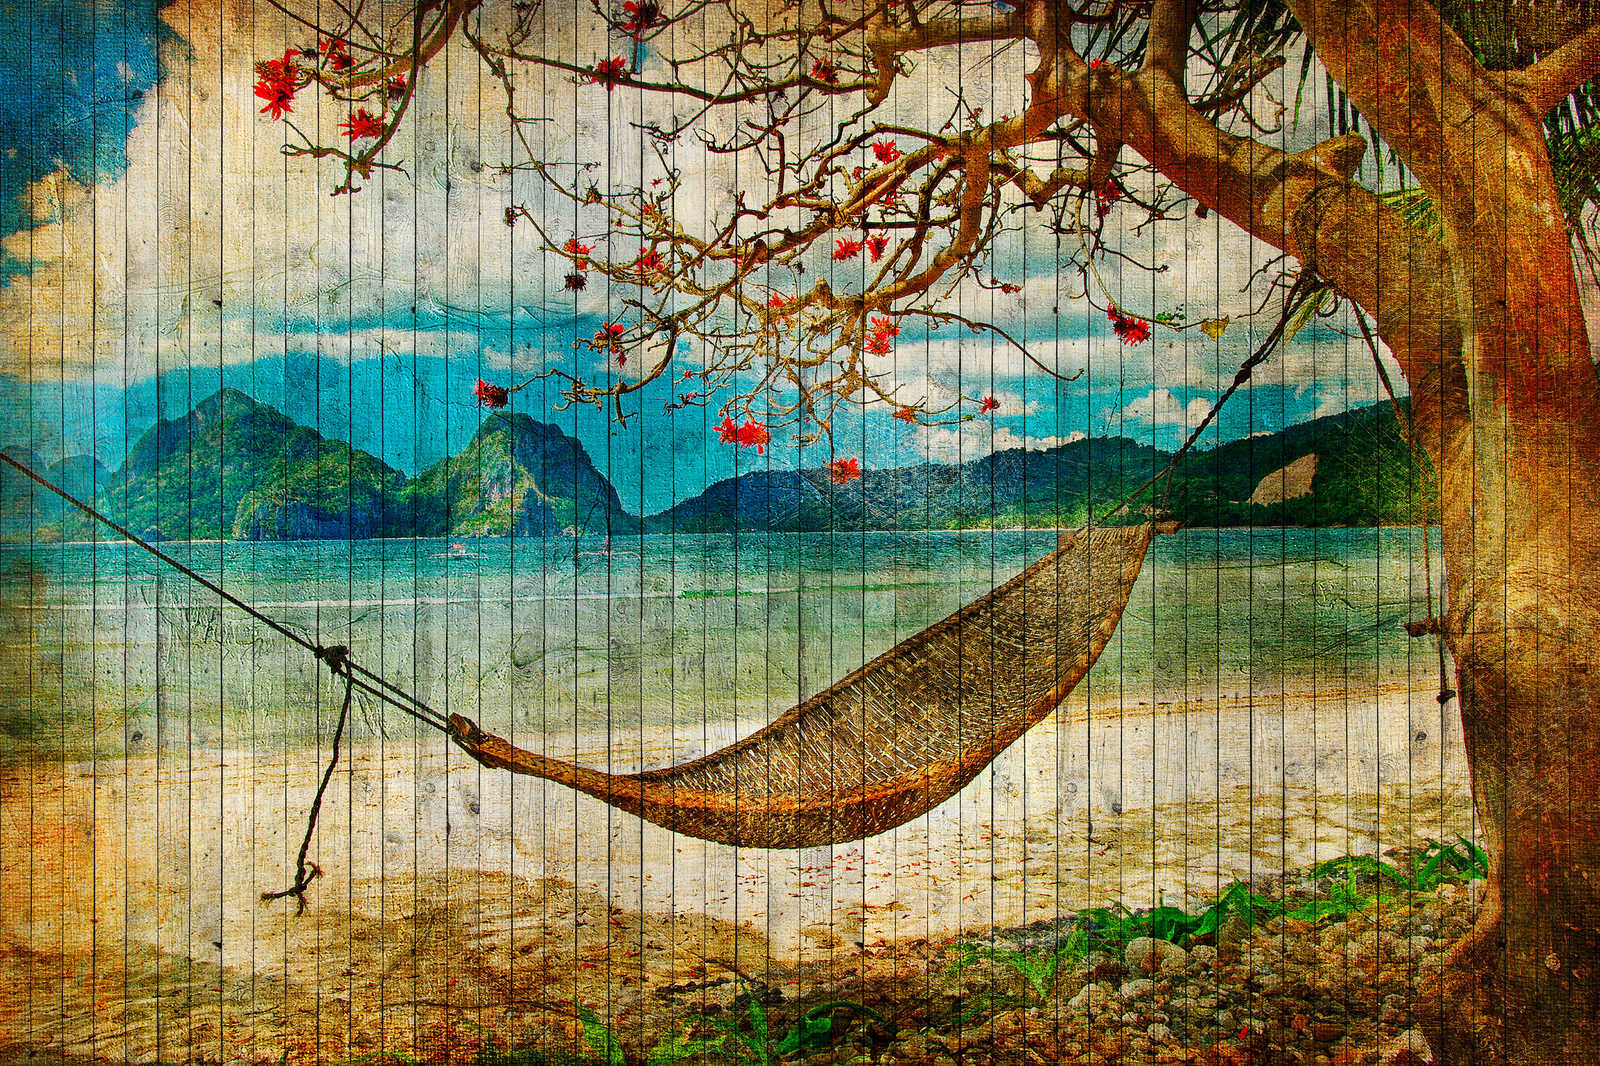             Tahiti 2 - Canvas schilderij in houtpaneel optiek met hangmat & Zuidzee strand - 0,90 m x 0,60 m
        